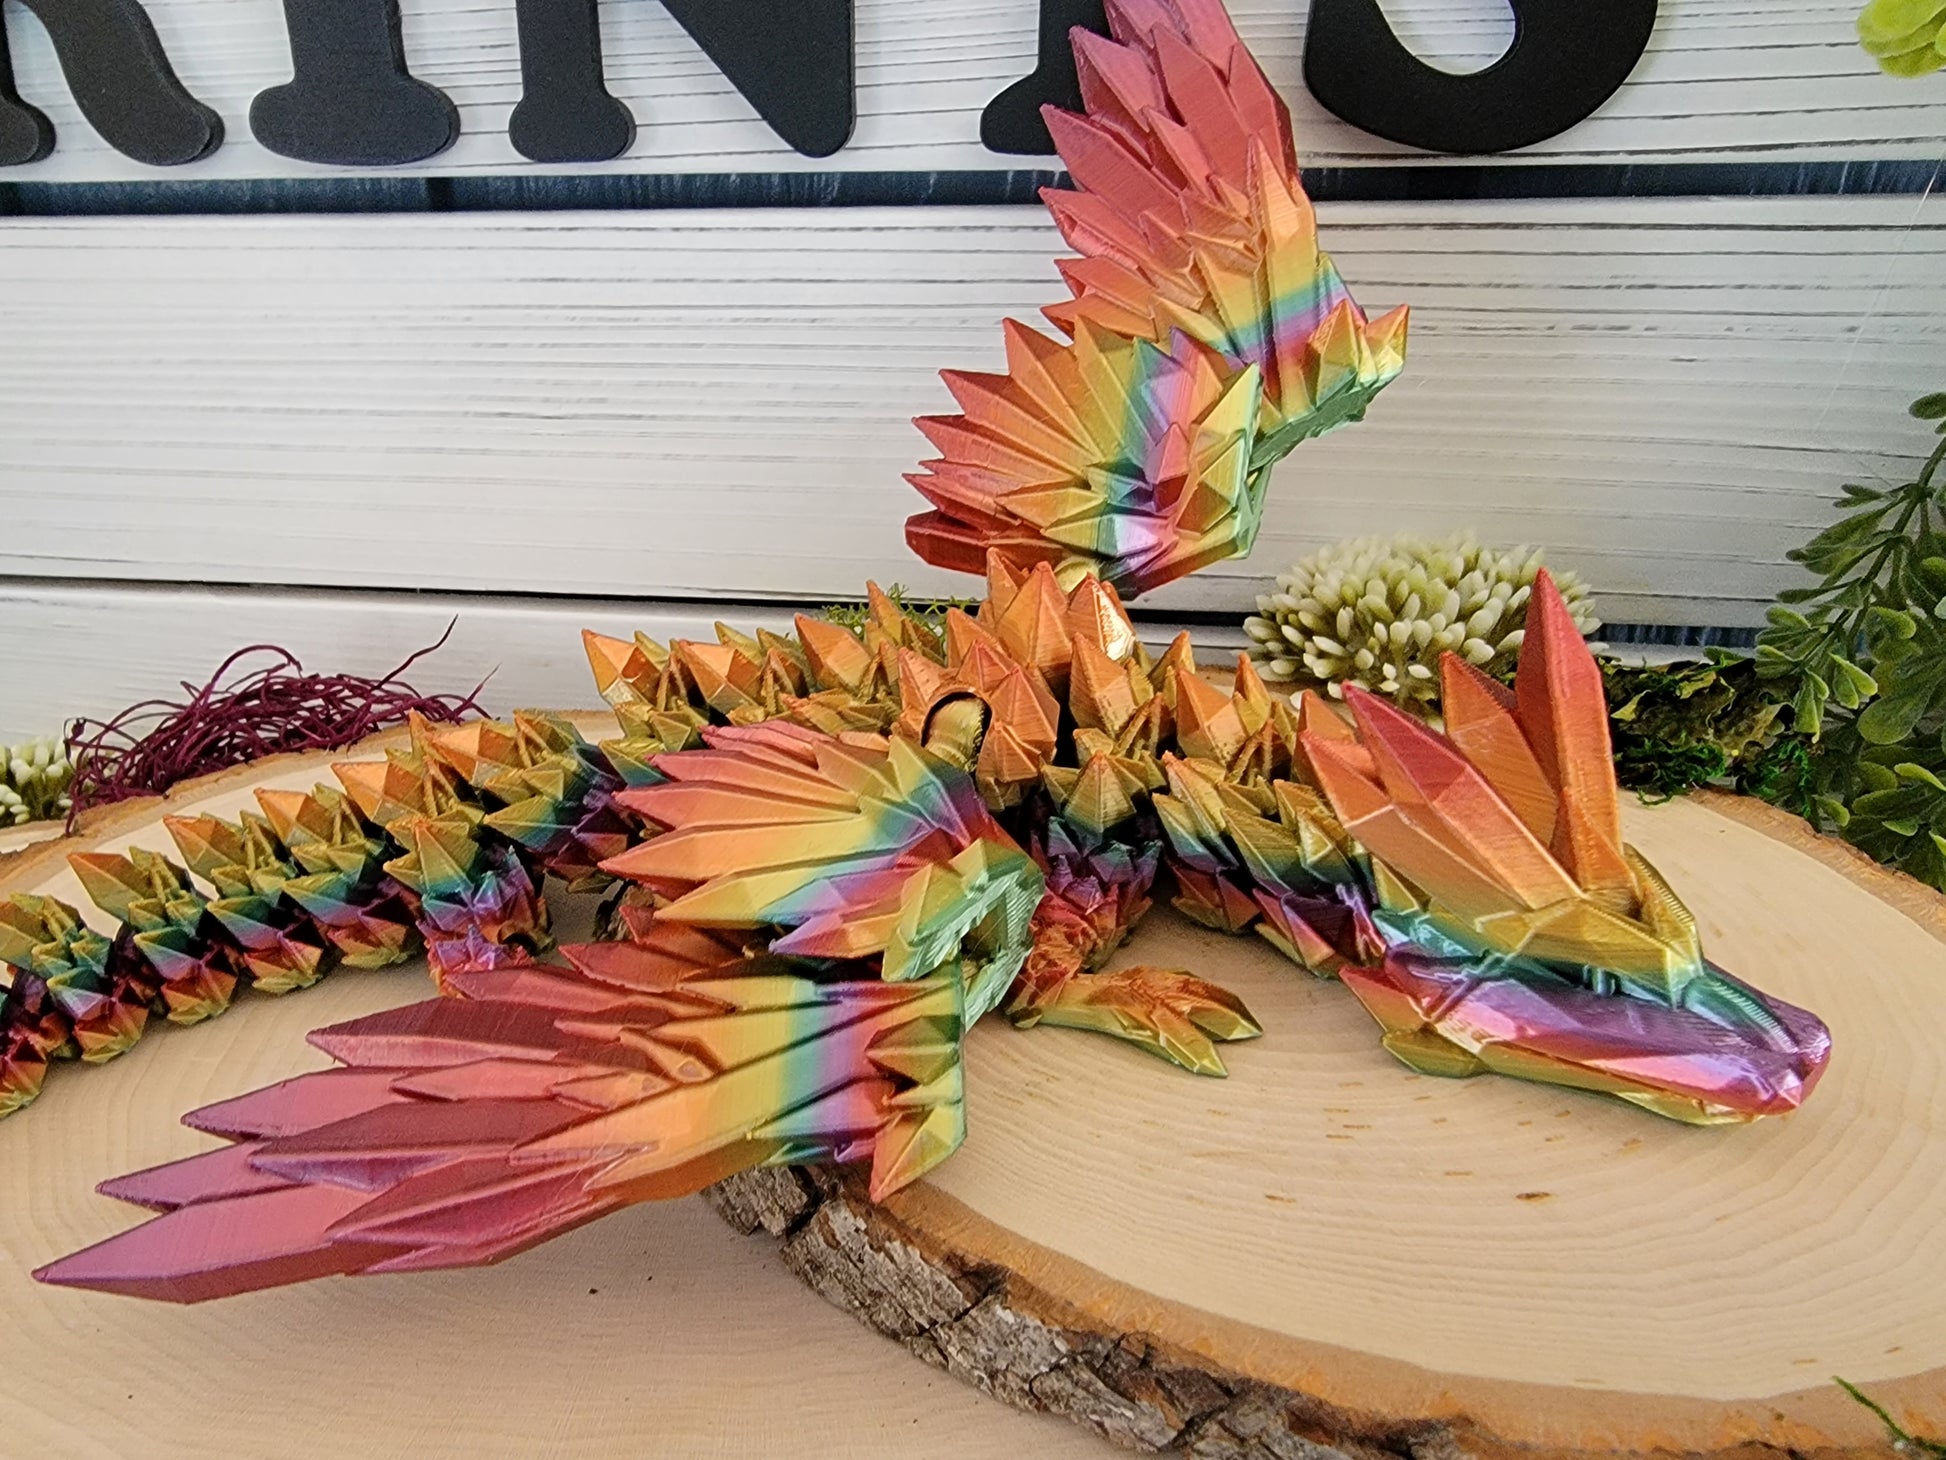 Crystal wings dragon 3D print – keats woodworking